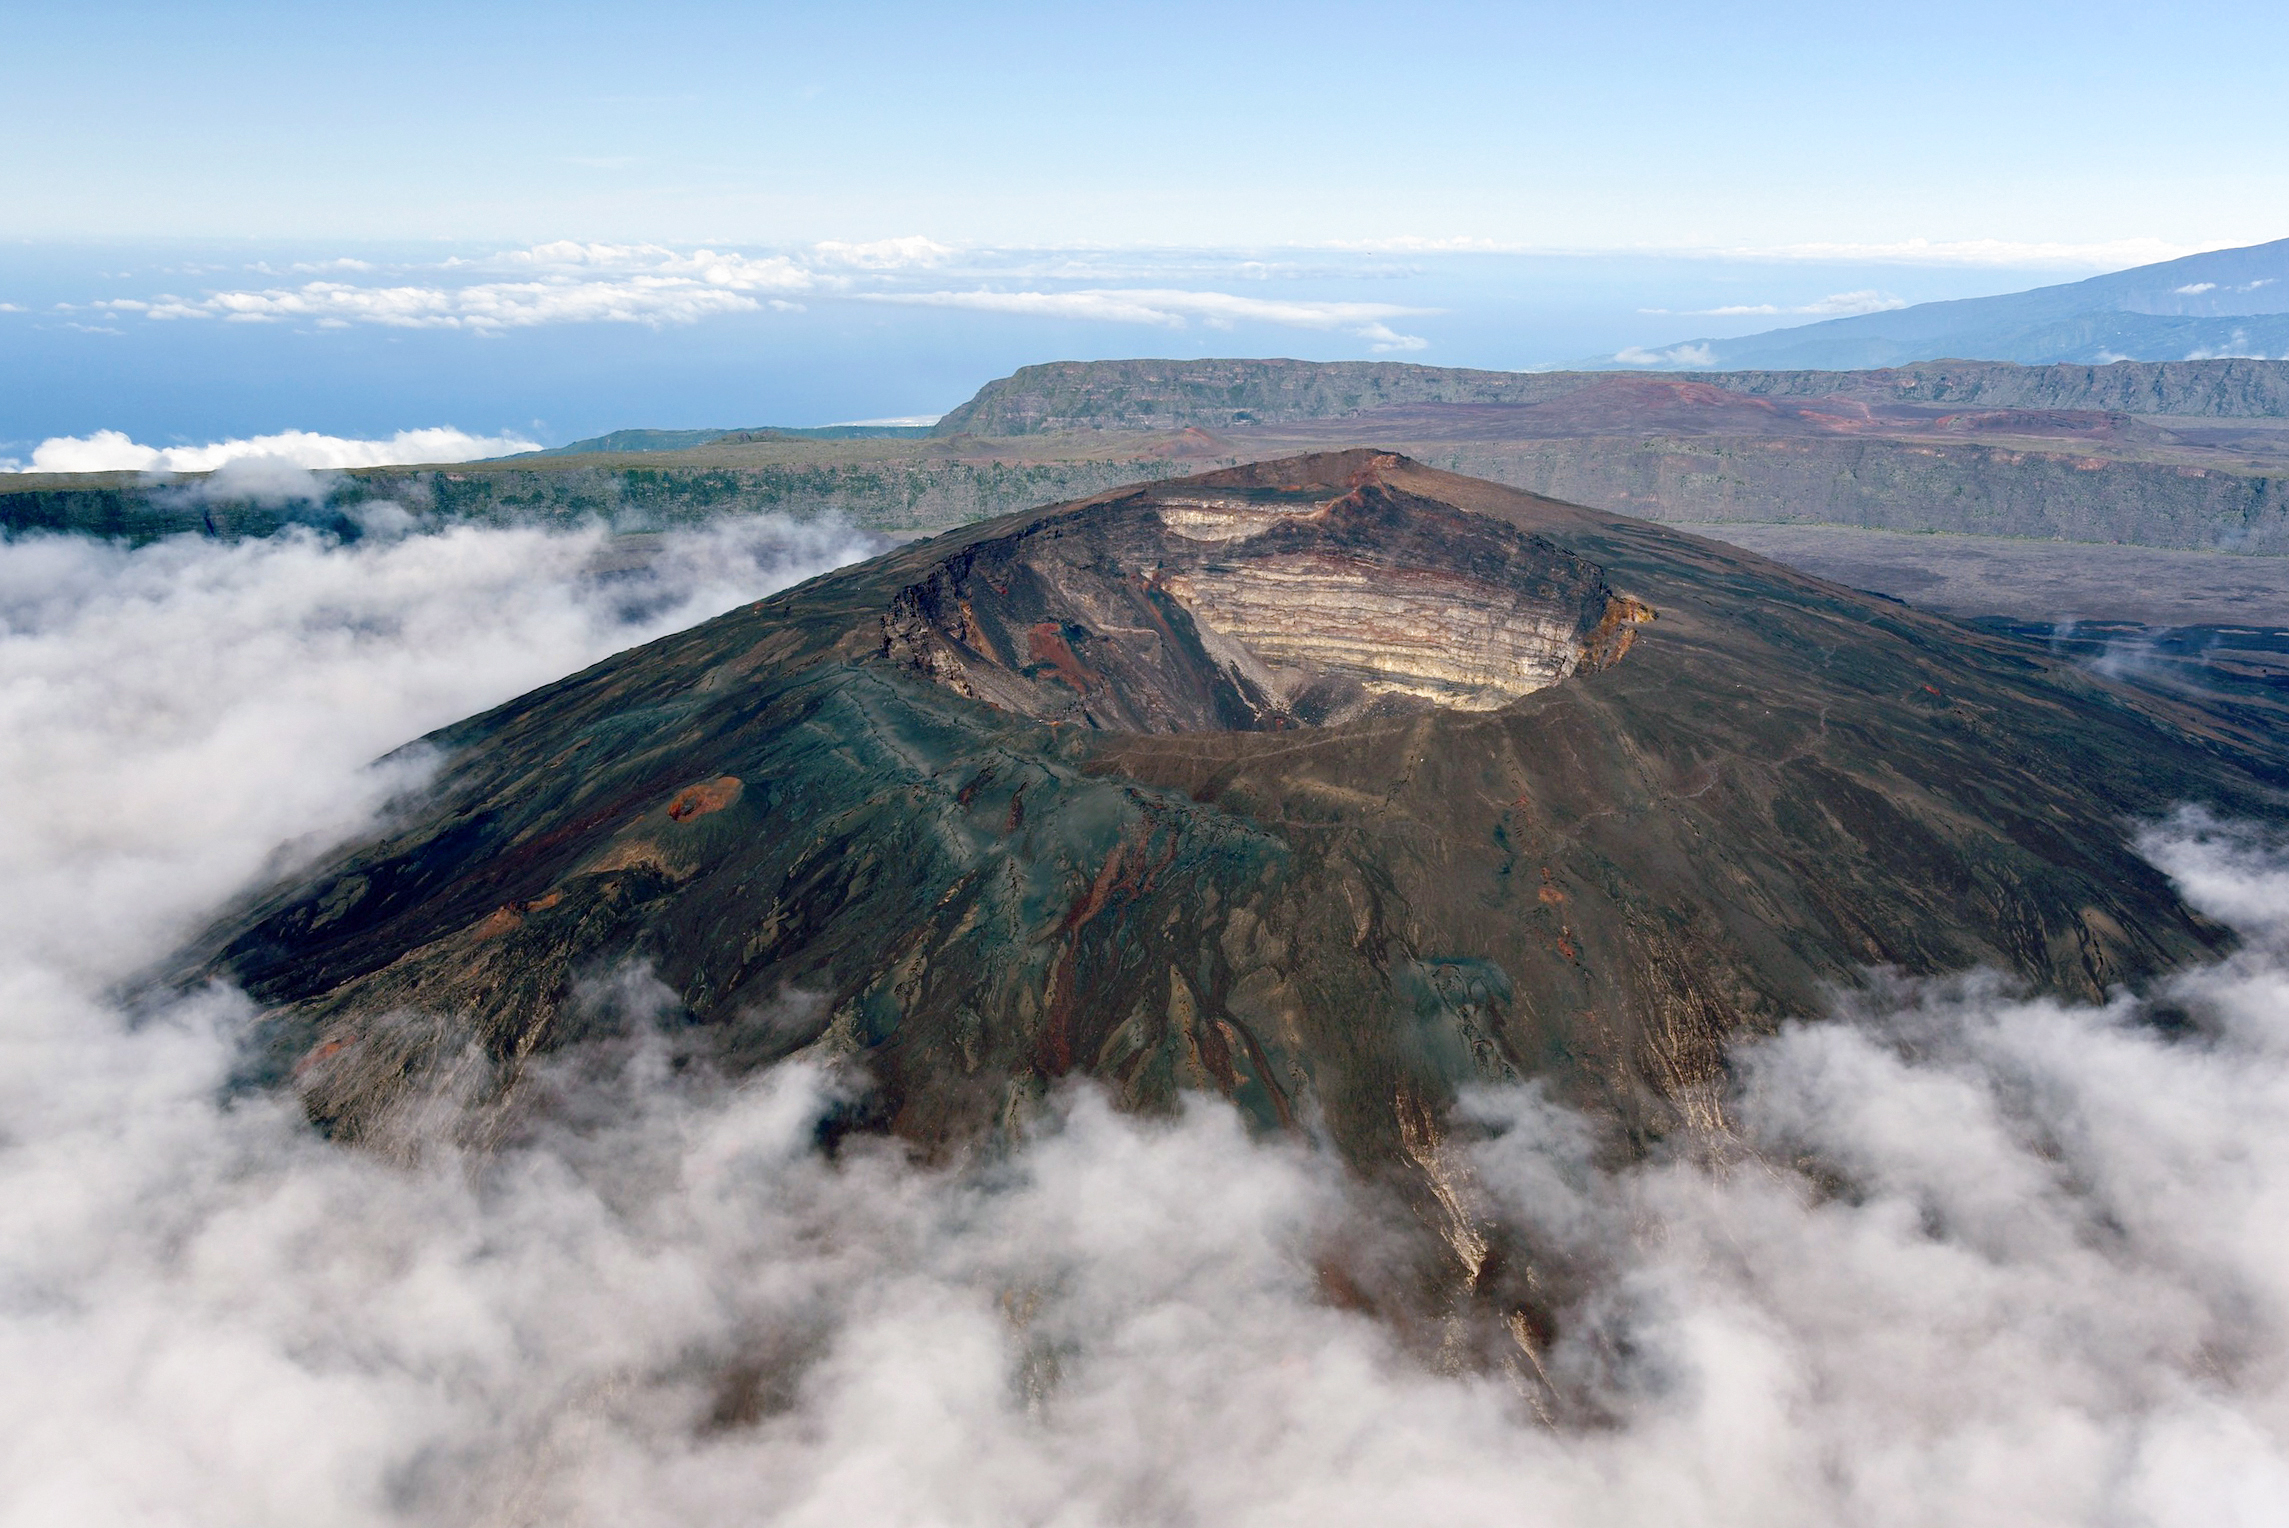 Piton de la Fournaise volcano, looms above the clouds